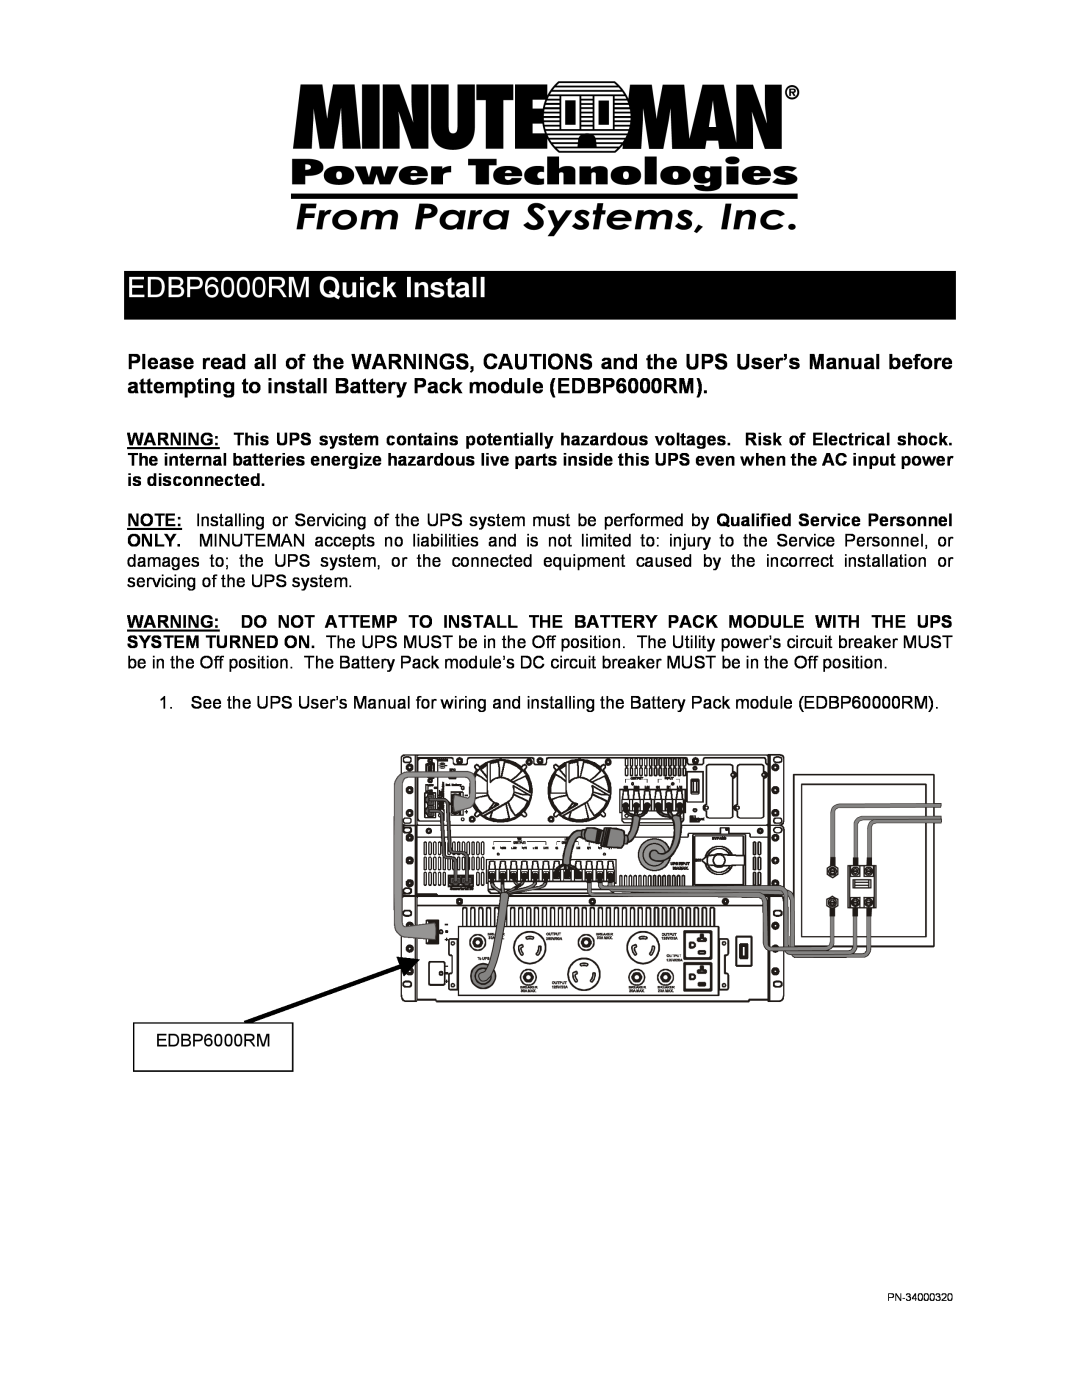 Minuteman UPS user manual EDBP6000RM Quick Install 